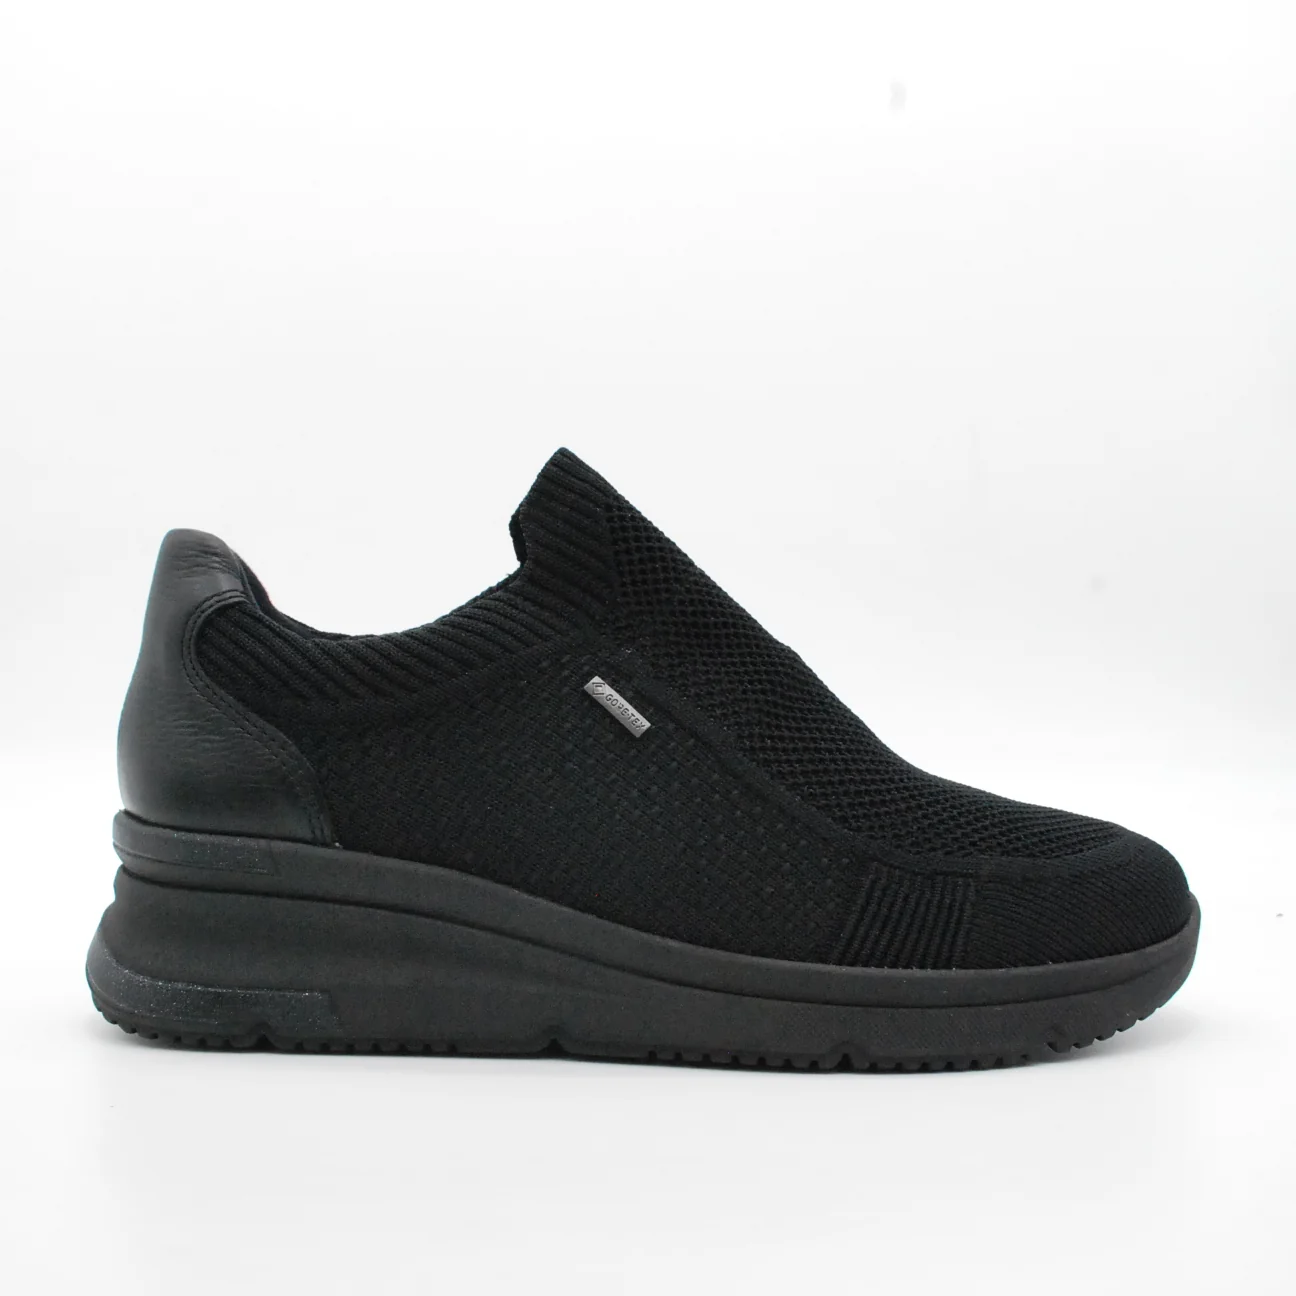 sneakers-ara-in-tessuto-tecnico-35-nero-tessuto-tecnico-comfort.png